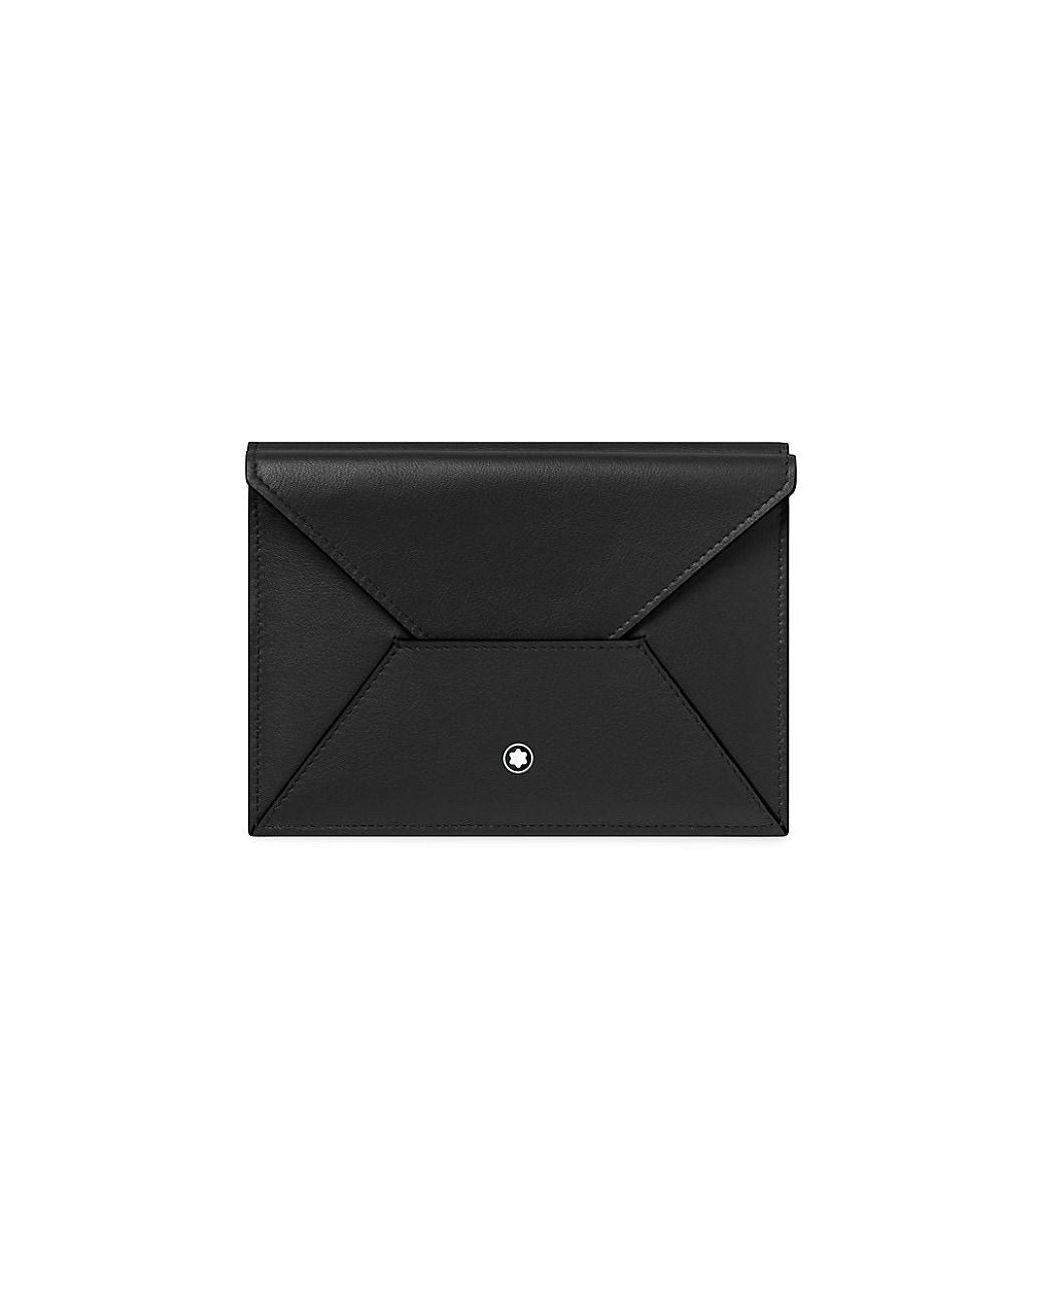 Montblanc Meisterstuck Selection Soft Wallet - Black